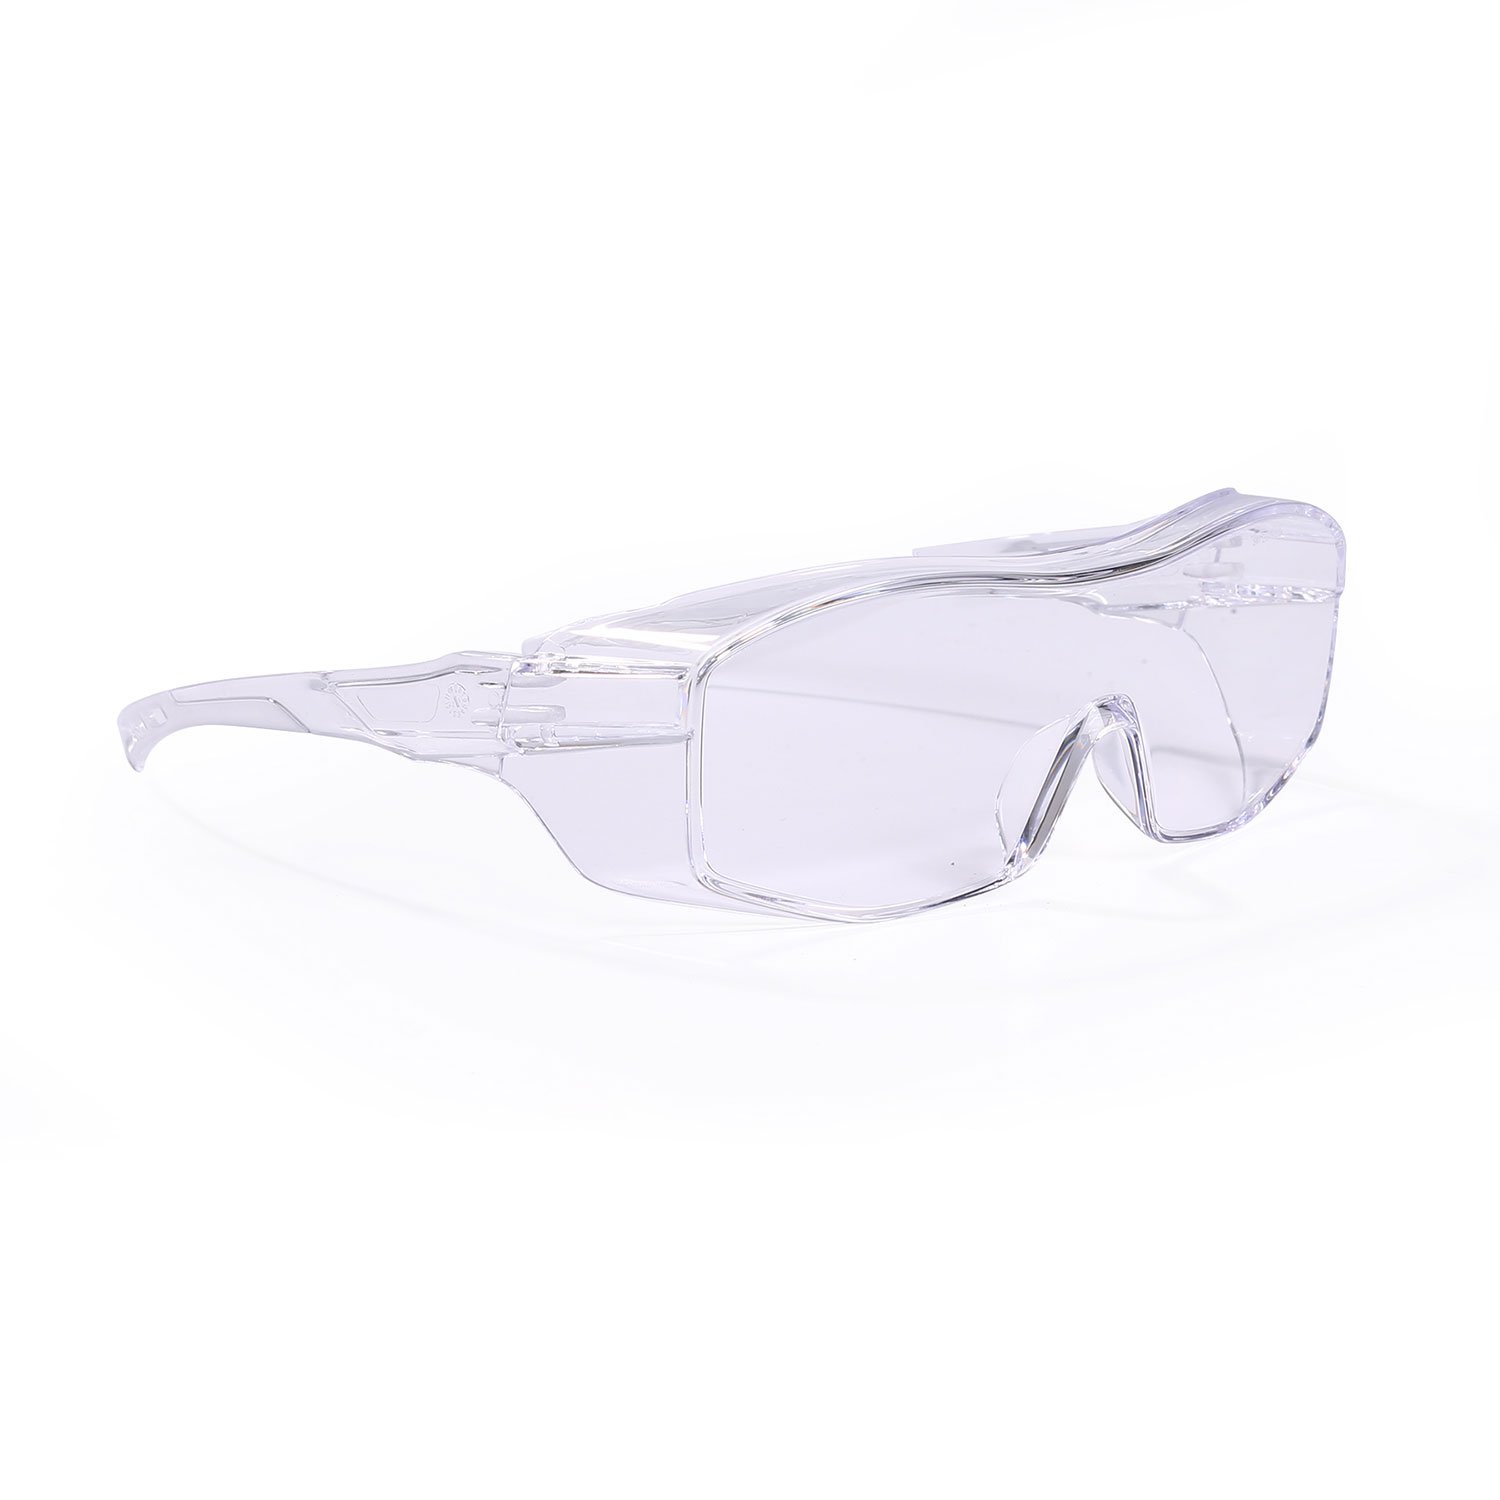 3M Peltor Sport Over The Glass Safety Eyewear